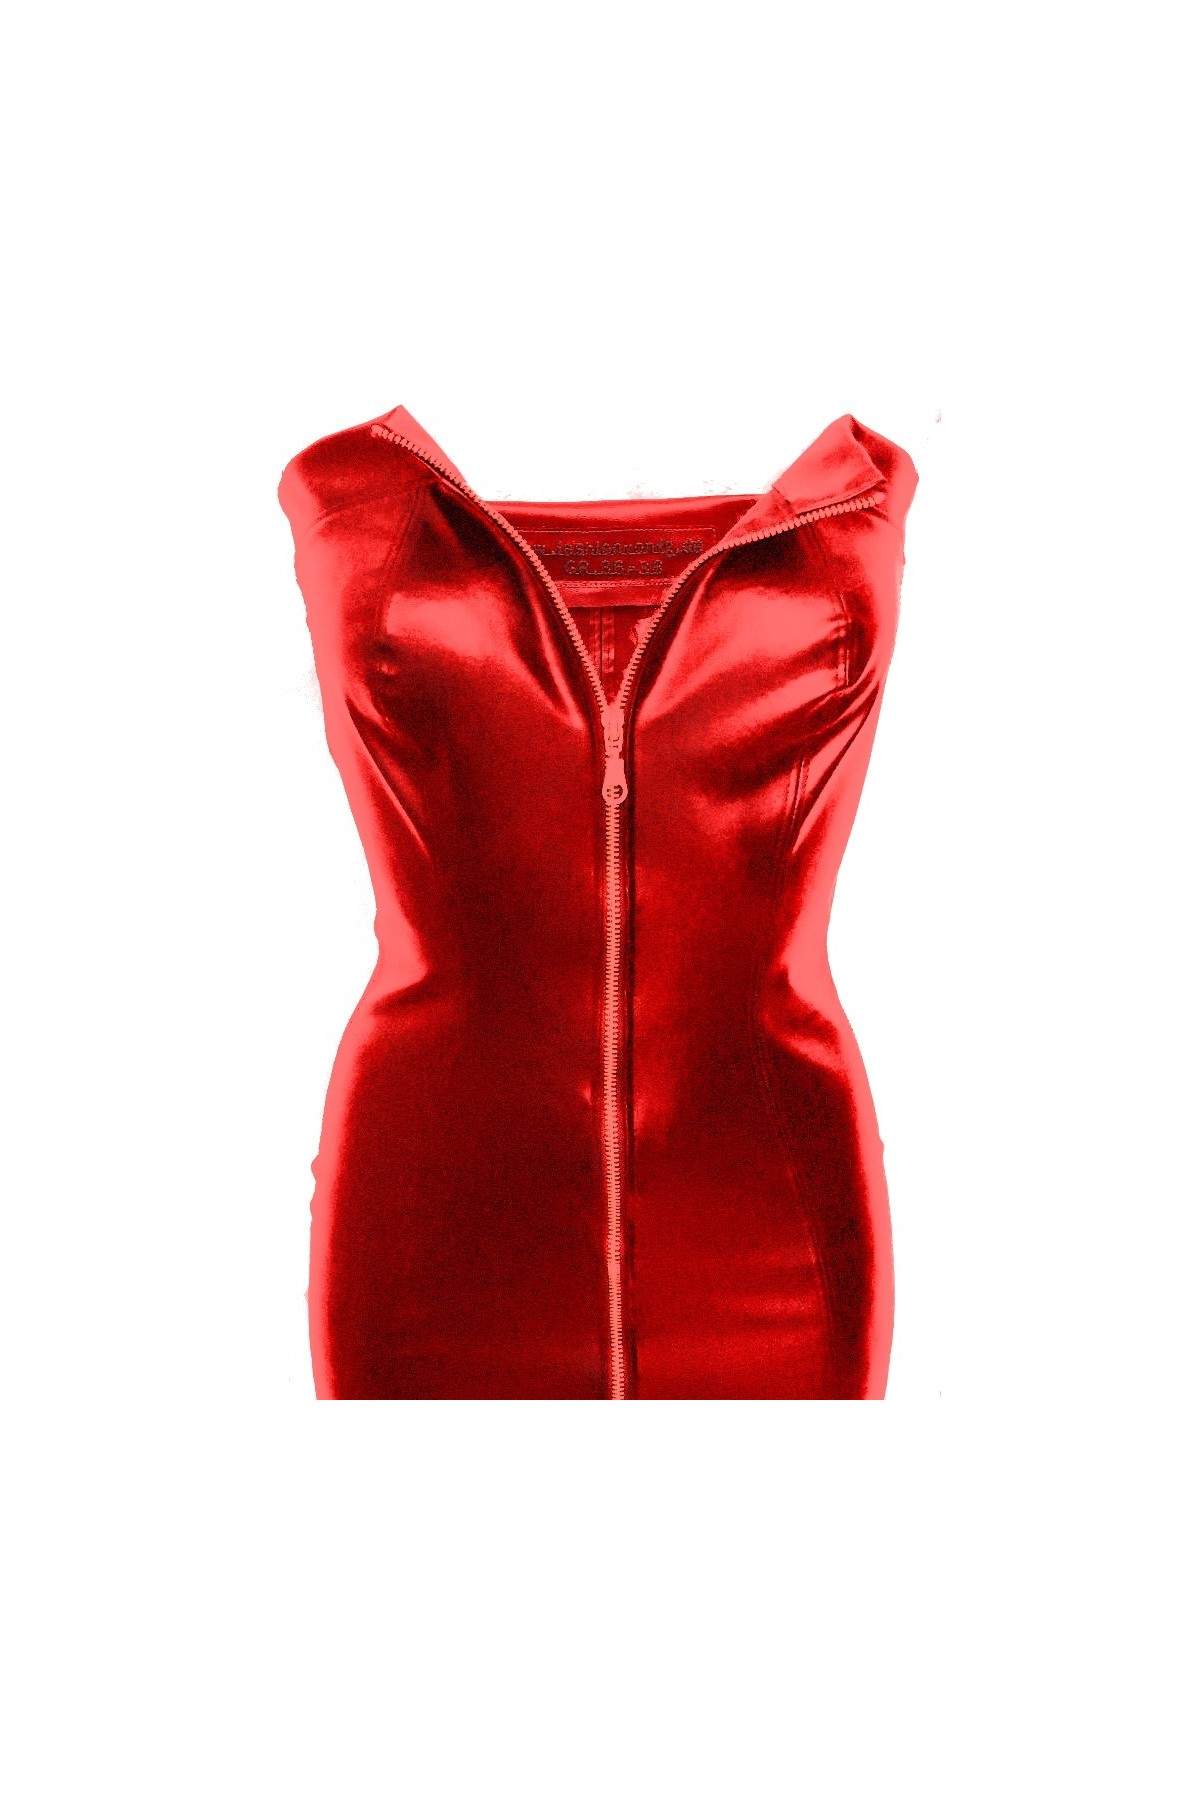 f.girth designer leather dress red - 